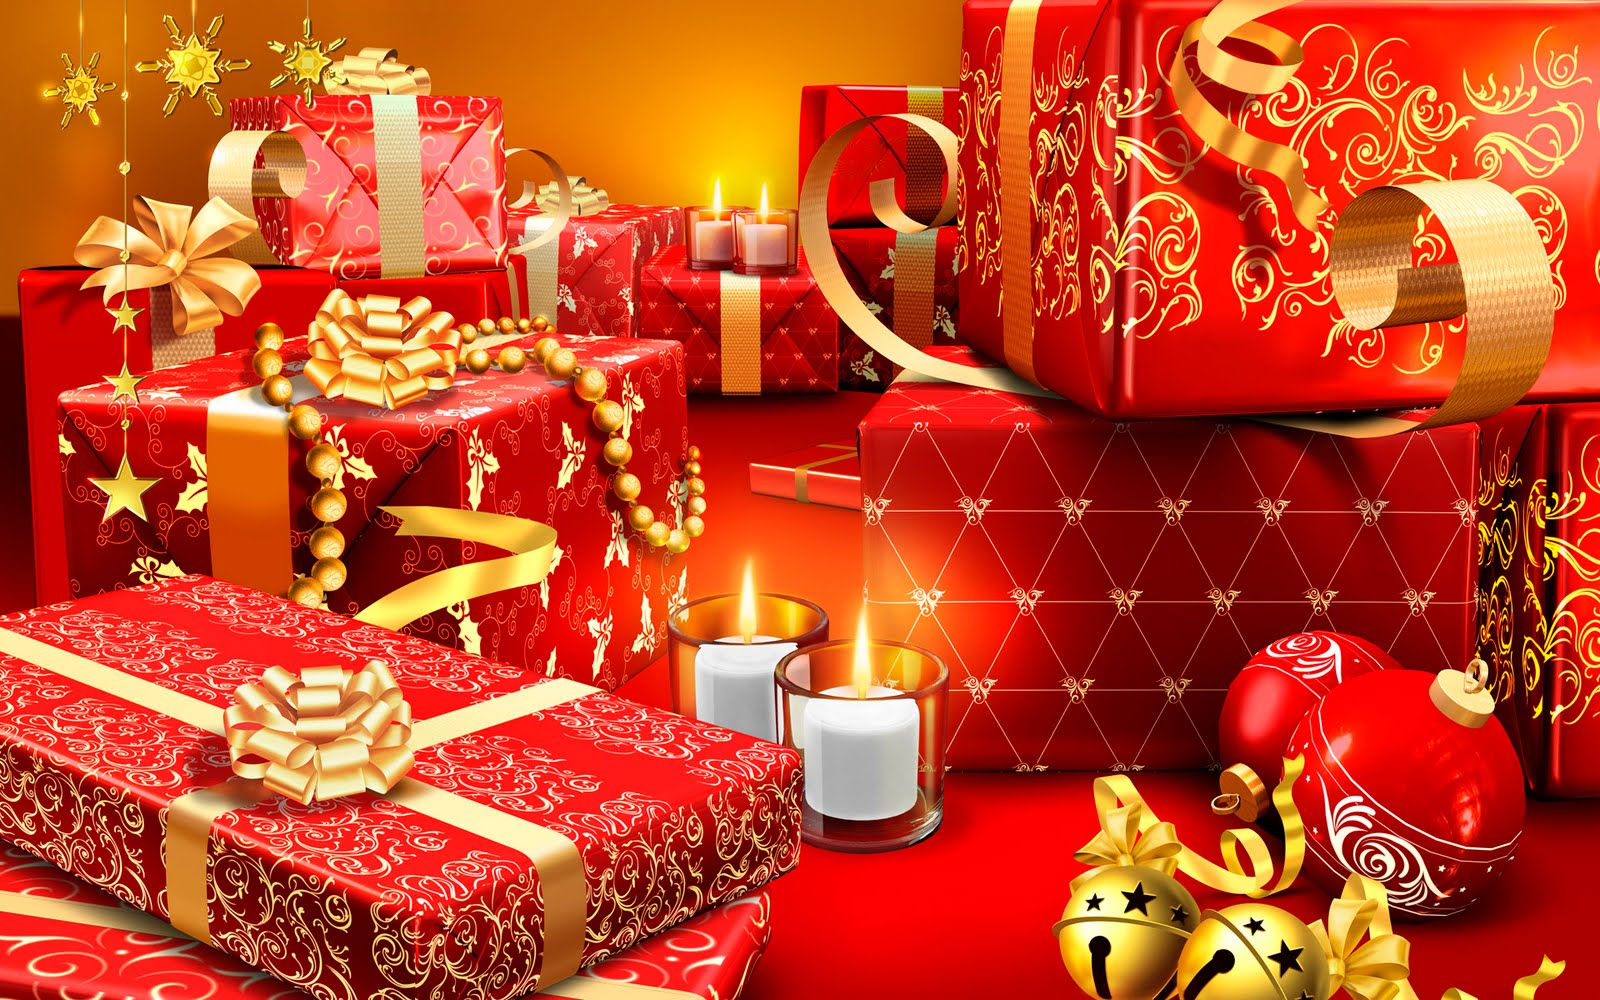 http://1.bp.blogspot.com/_XZtOBjNWtTs/TRAKOVdhEMI/AAAAAAAADP8/sYY5a6FmY7o/s1600/Christmas%2Bgifts.jpg